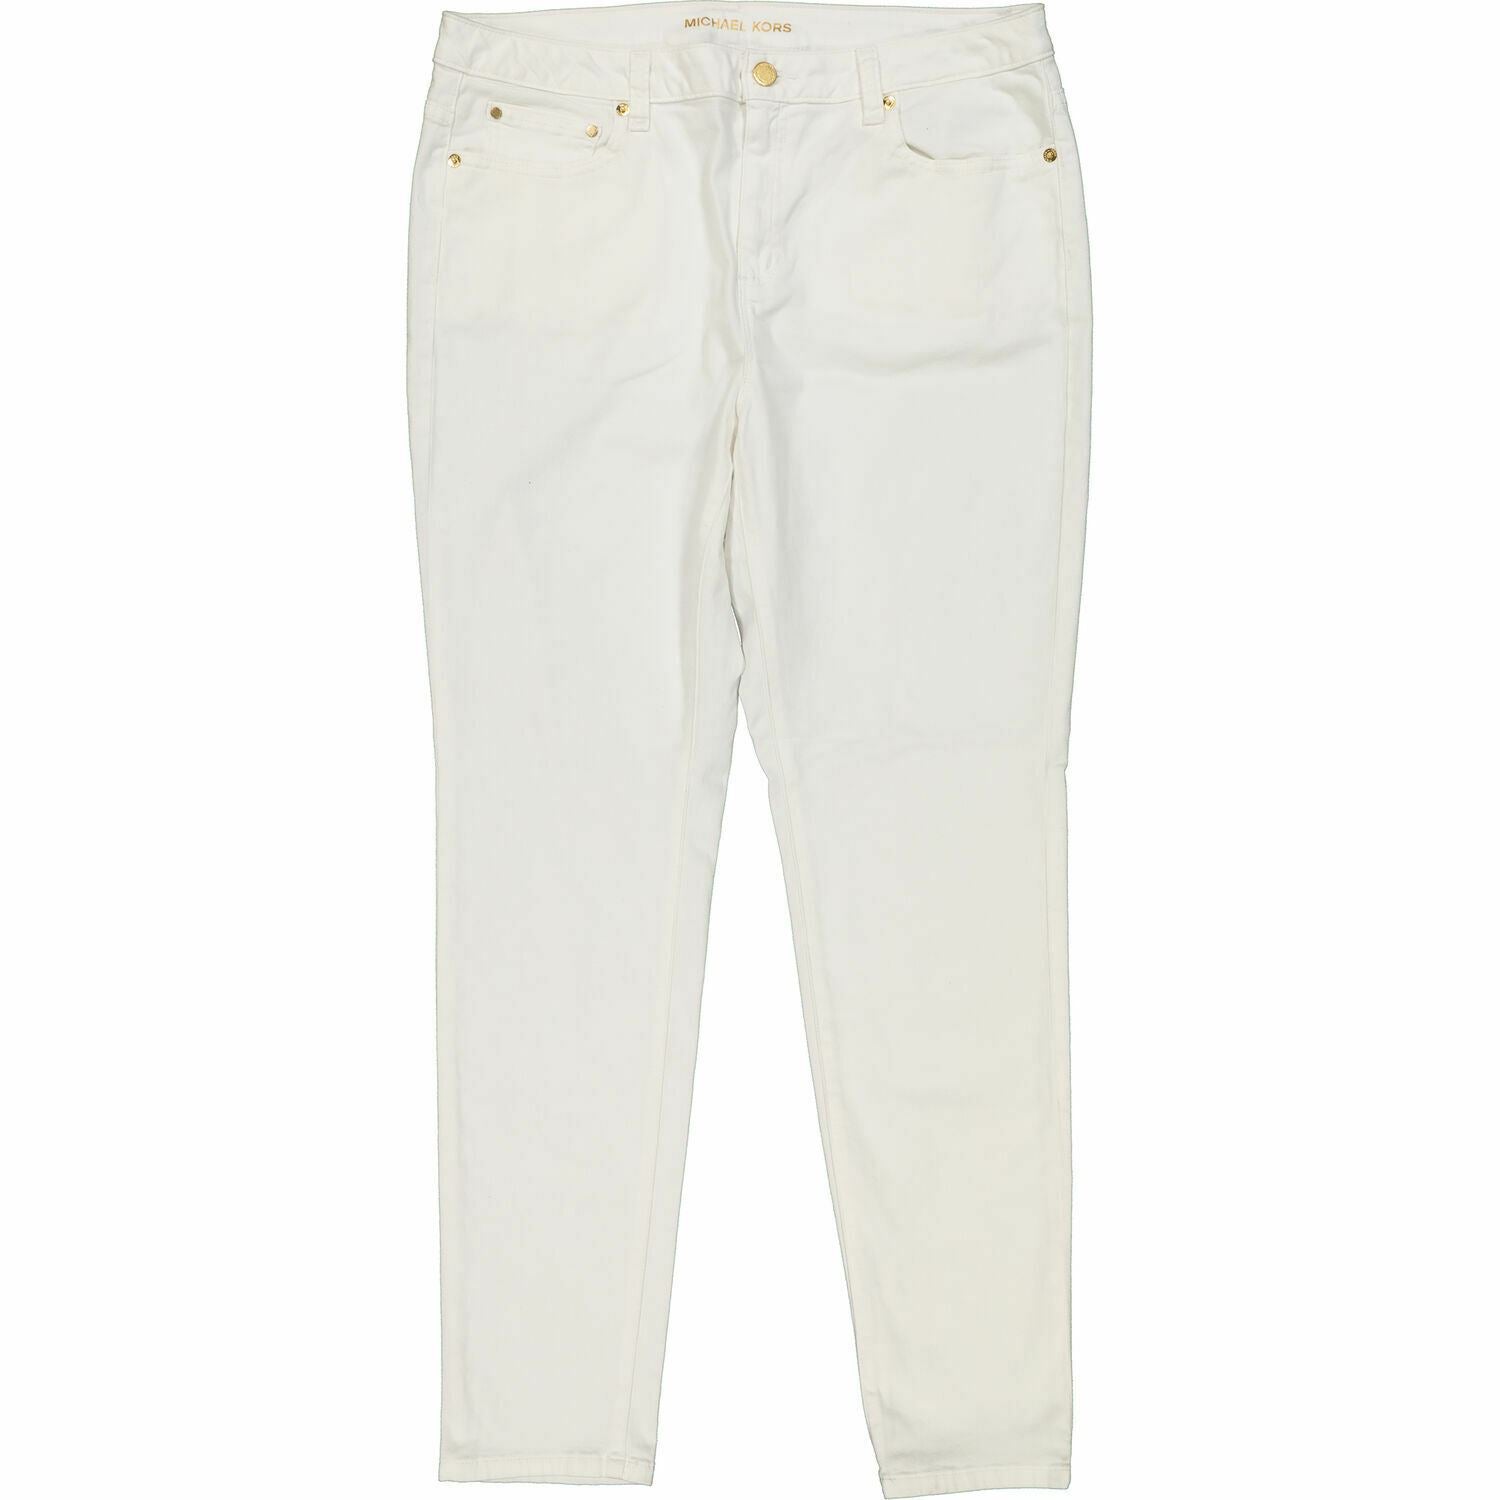 Michael Kors Women's Selma White Skinny Jeans, size UK 16